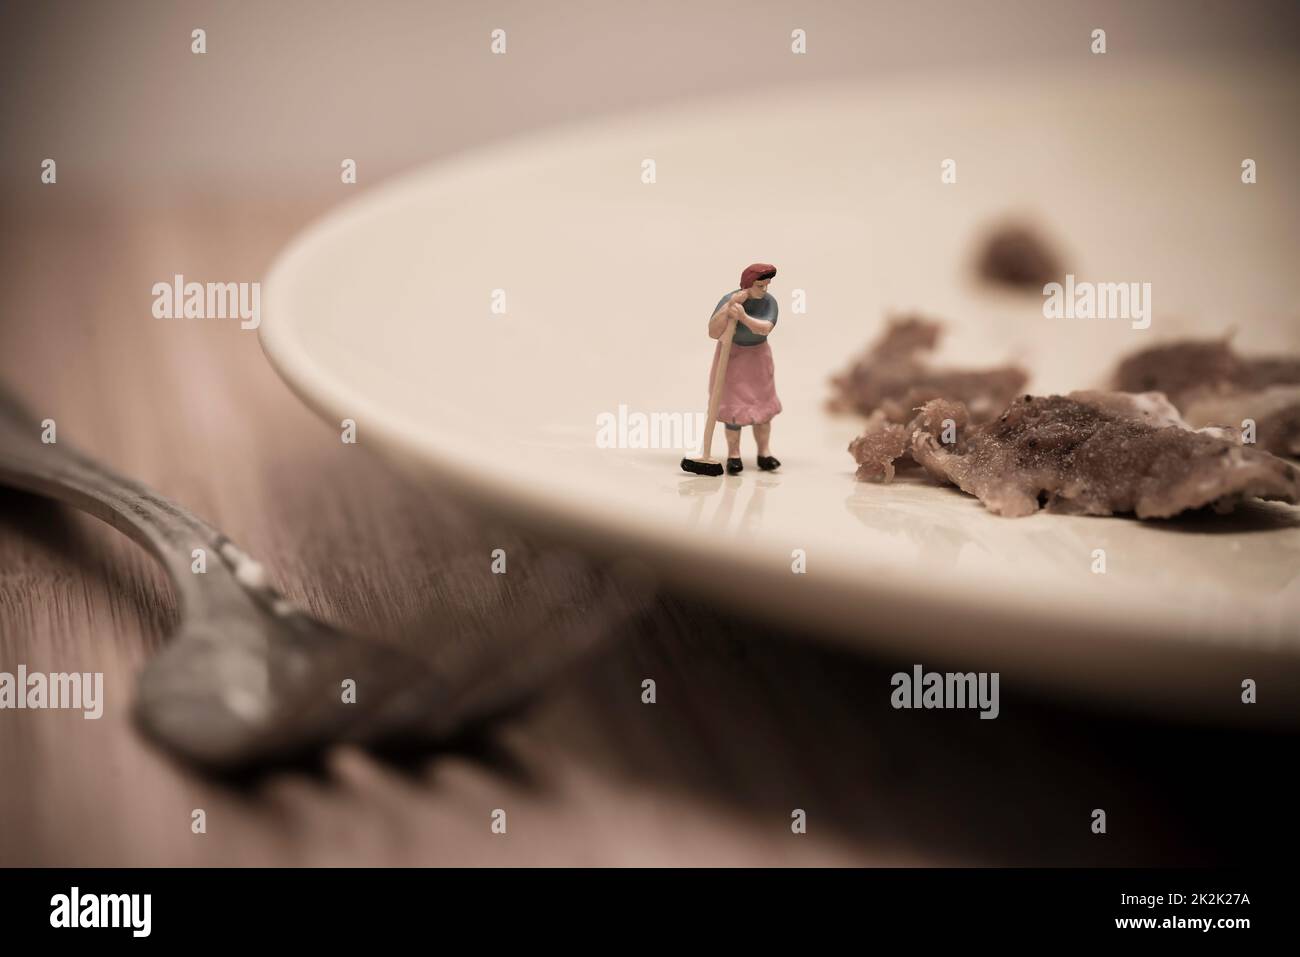 Miniature Housemaid Washing Dishes. Macro photo Stock Photo